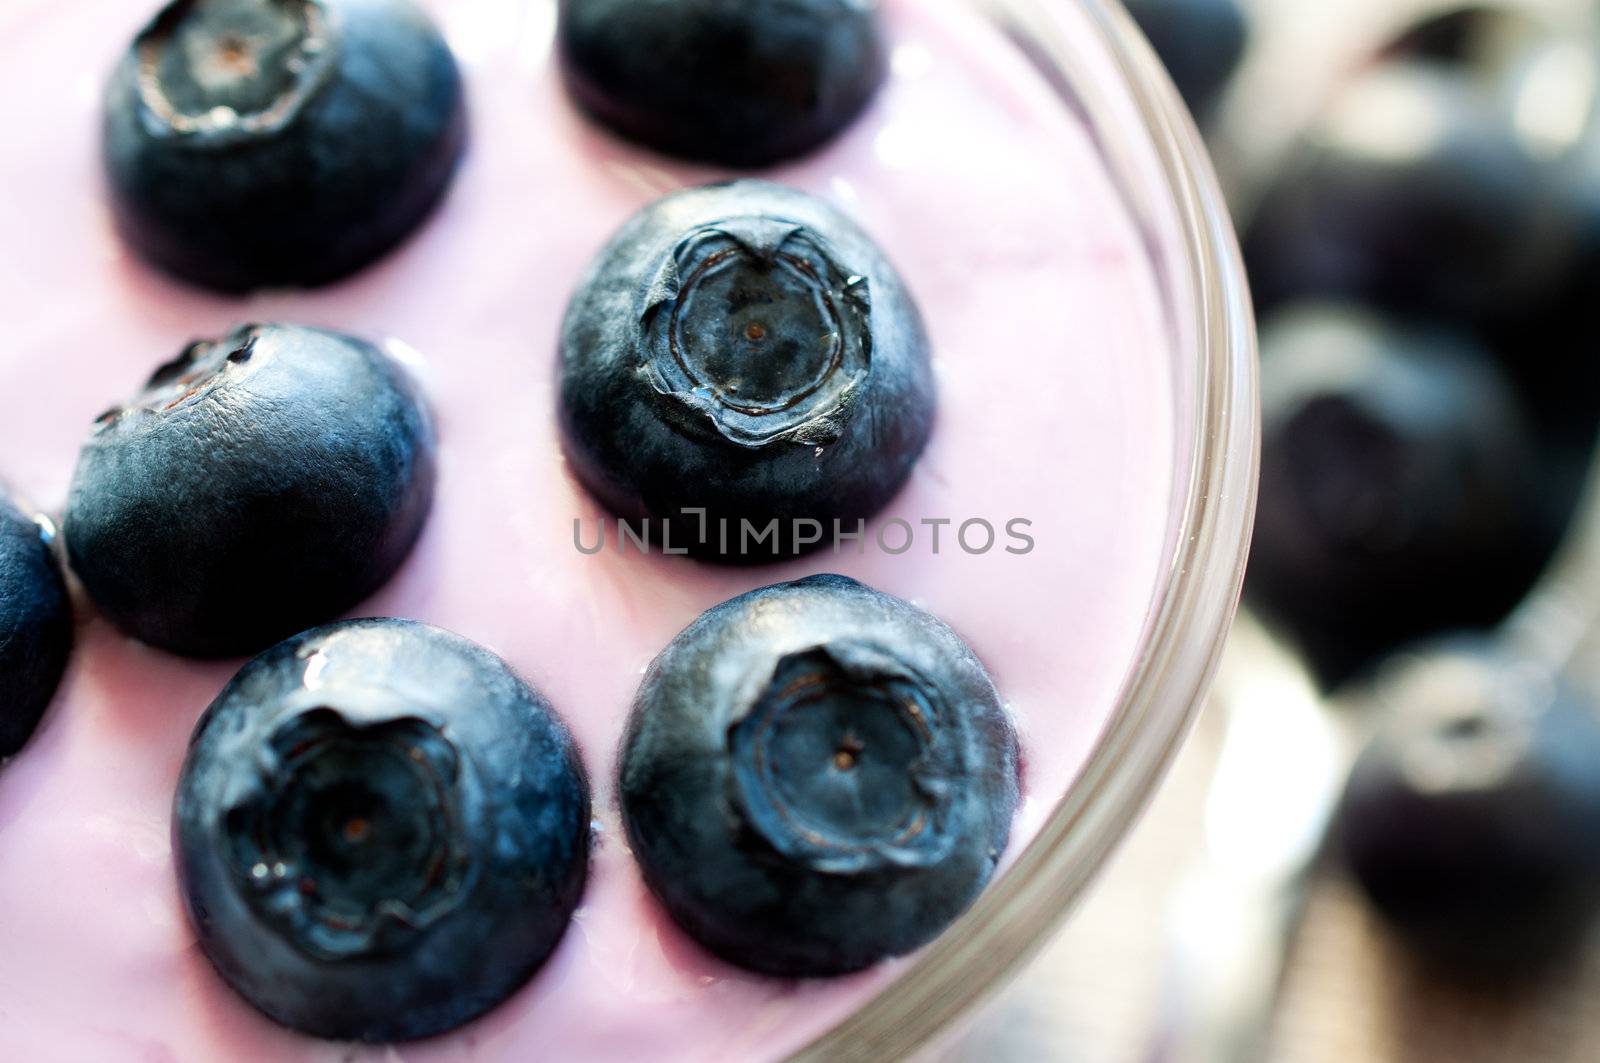 Blueberry yogurt with blueberries by Nanisimova